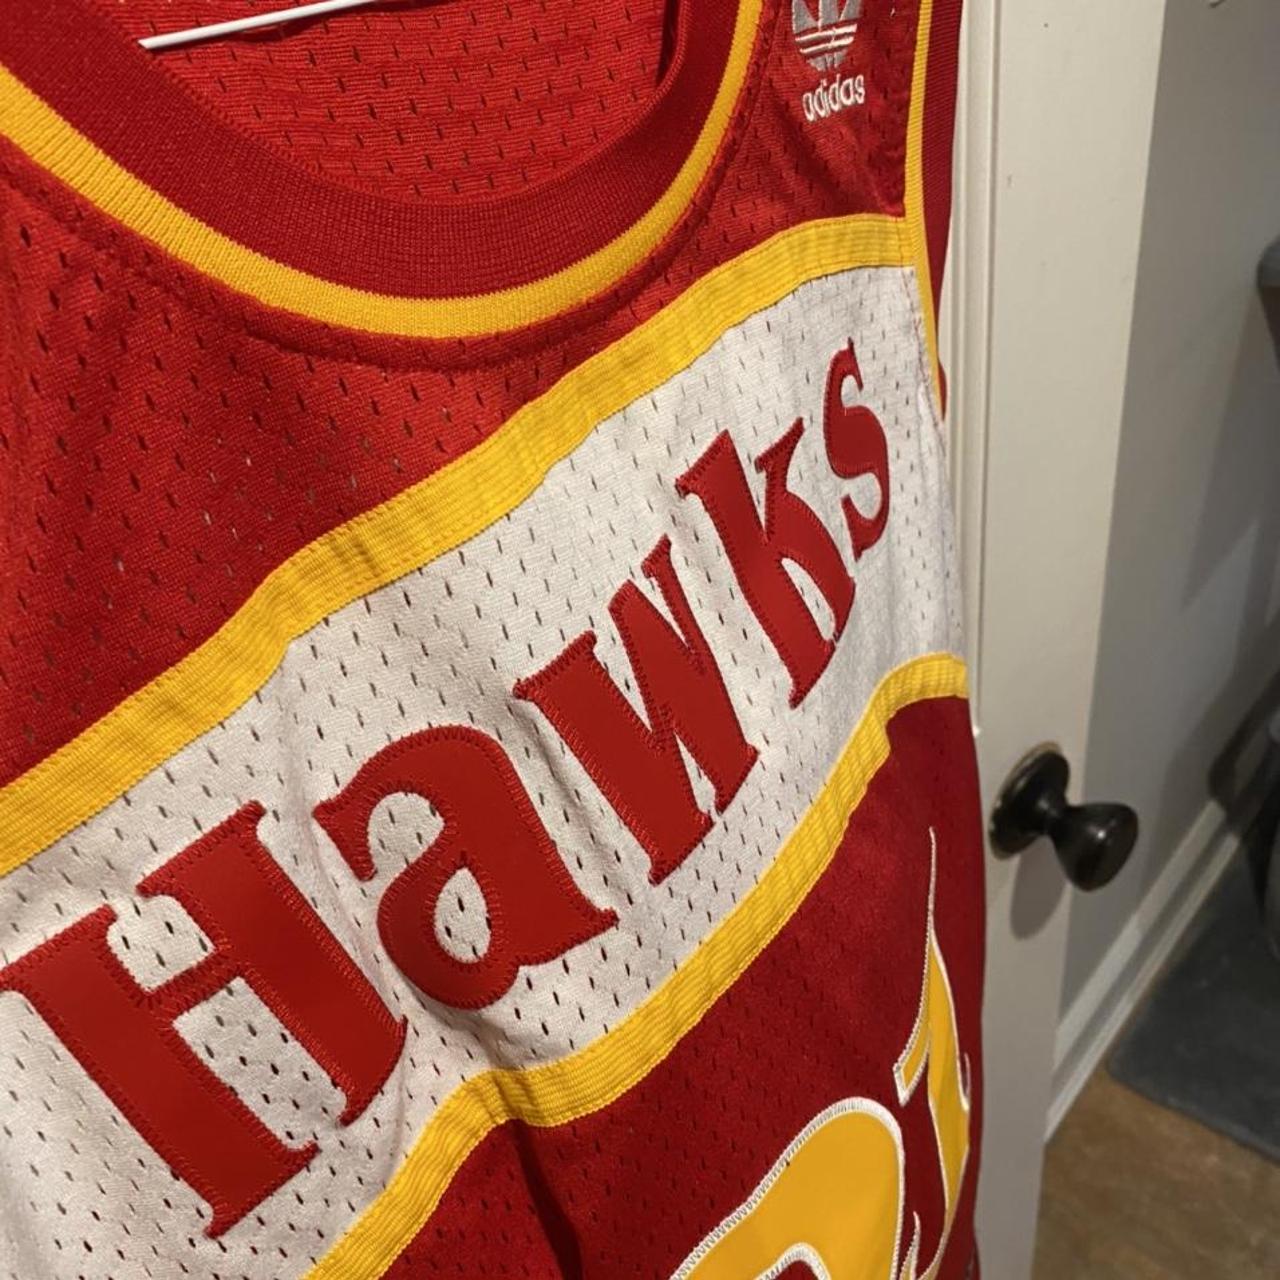 Product Image 3 - Dominique Wilkins jersey
Atlanta Hawks
Size -